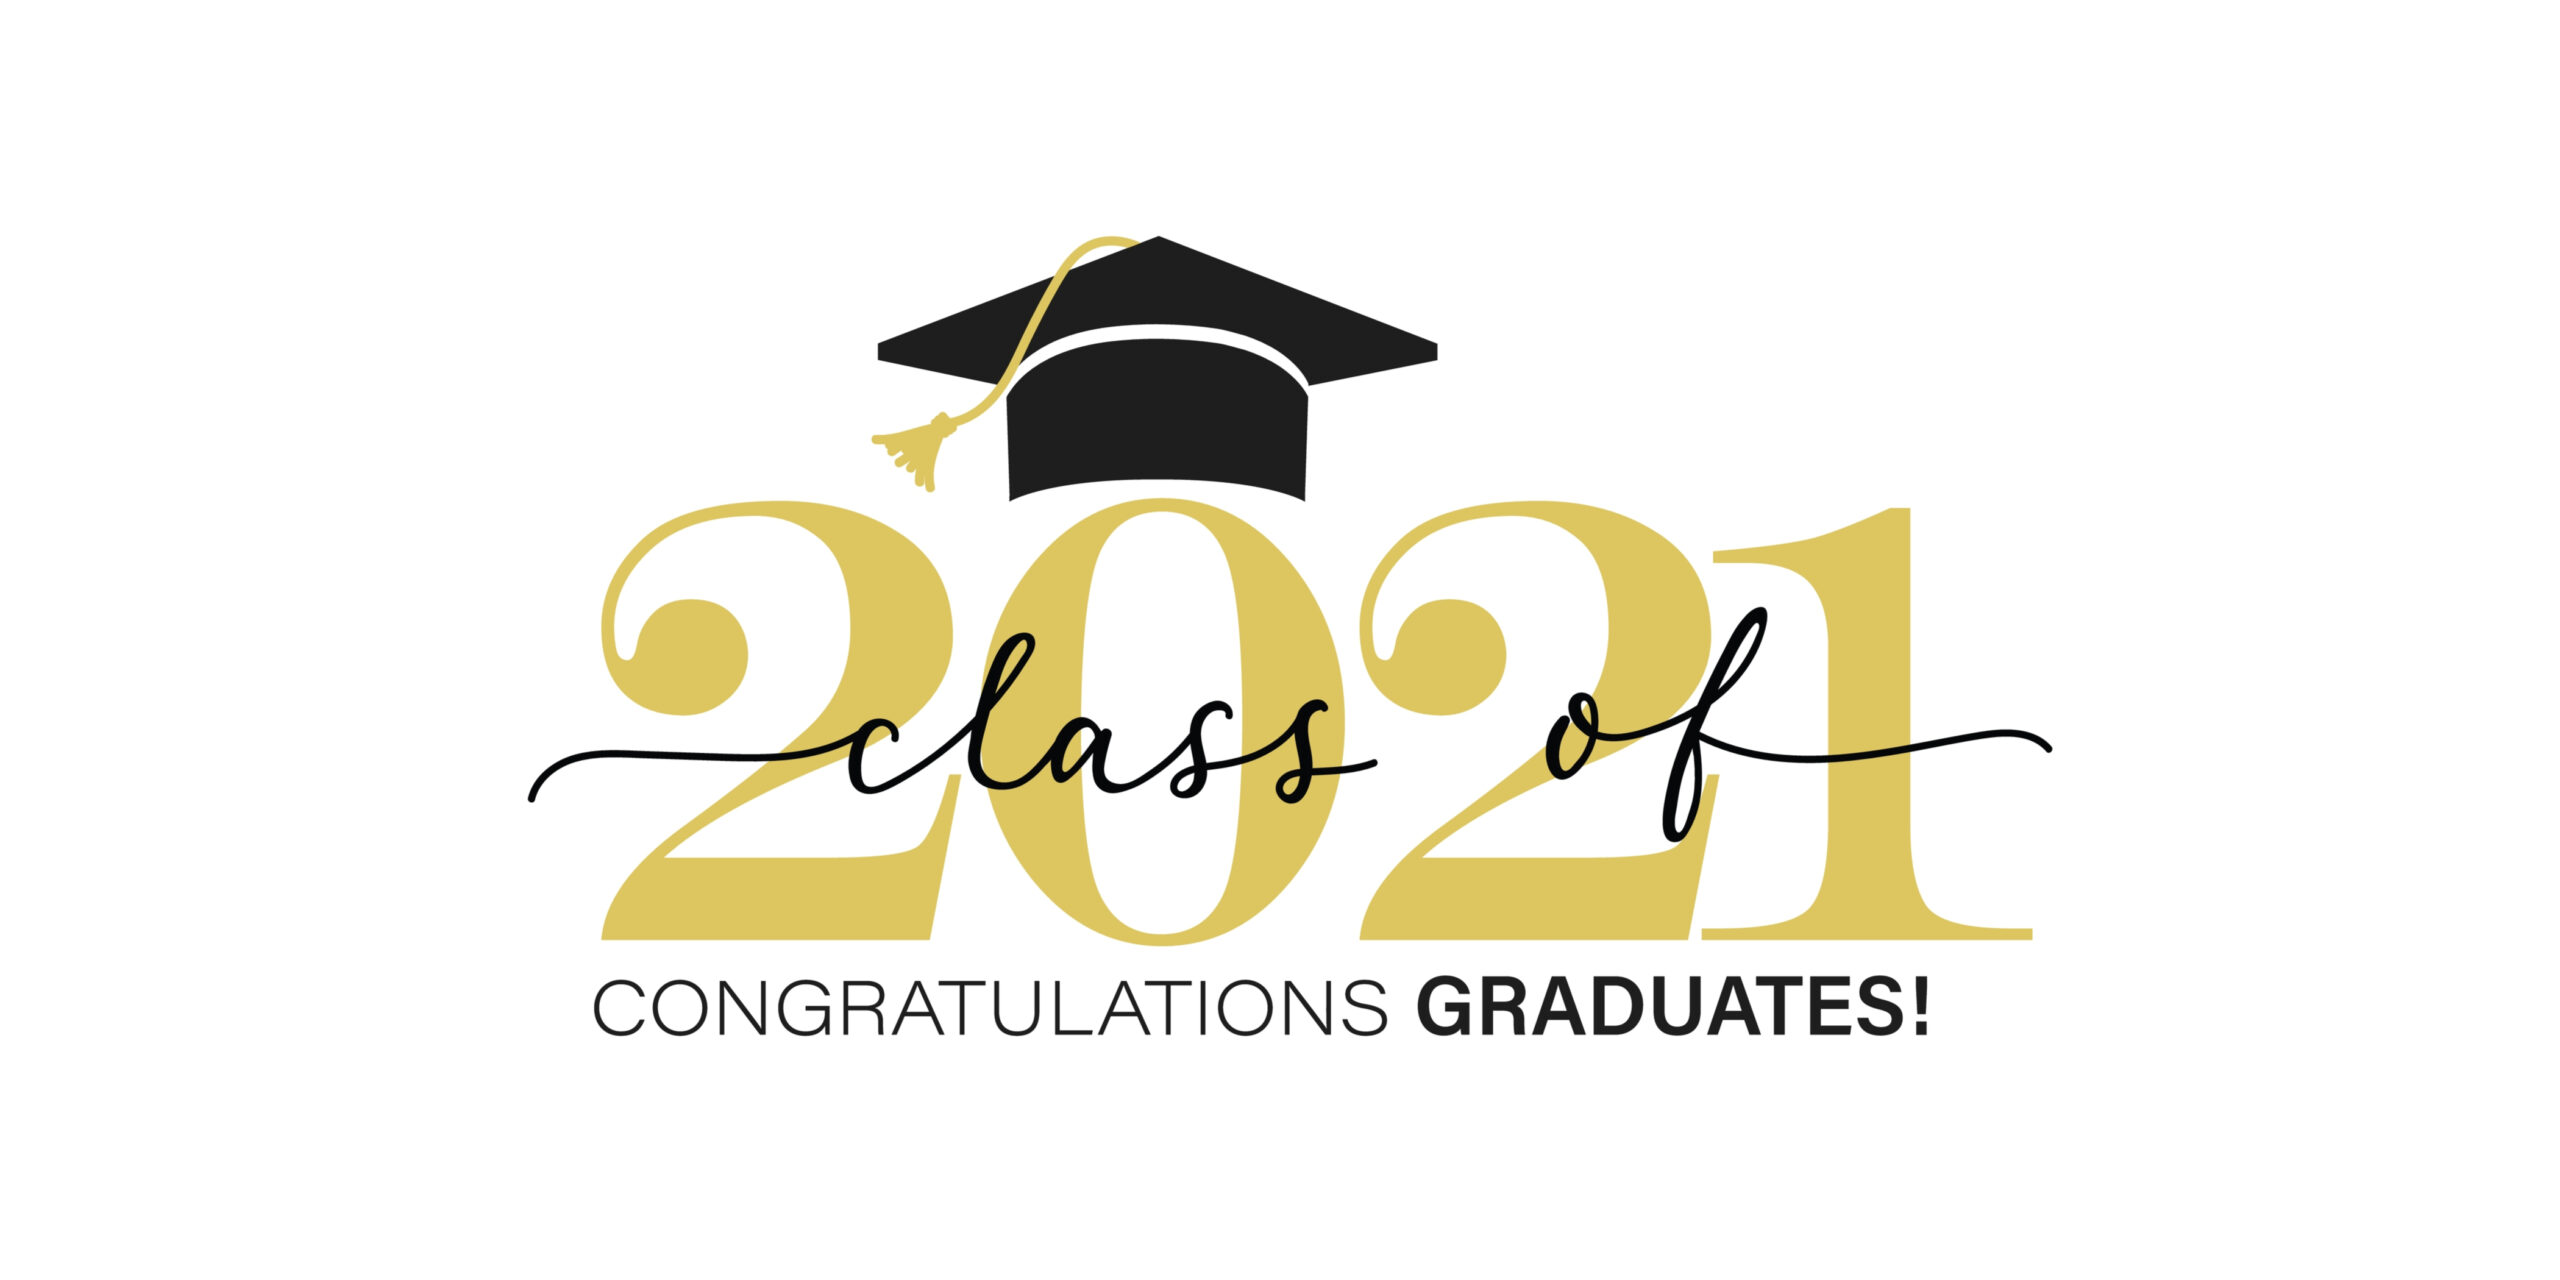 Mazel Tov 2021 Graduates!